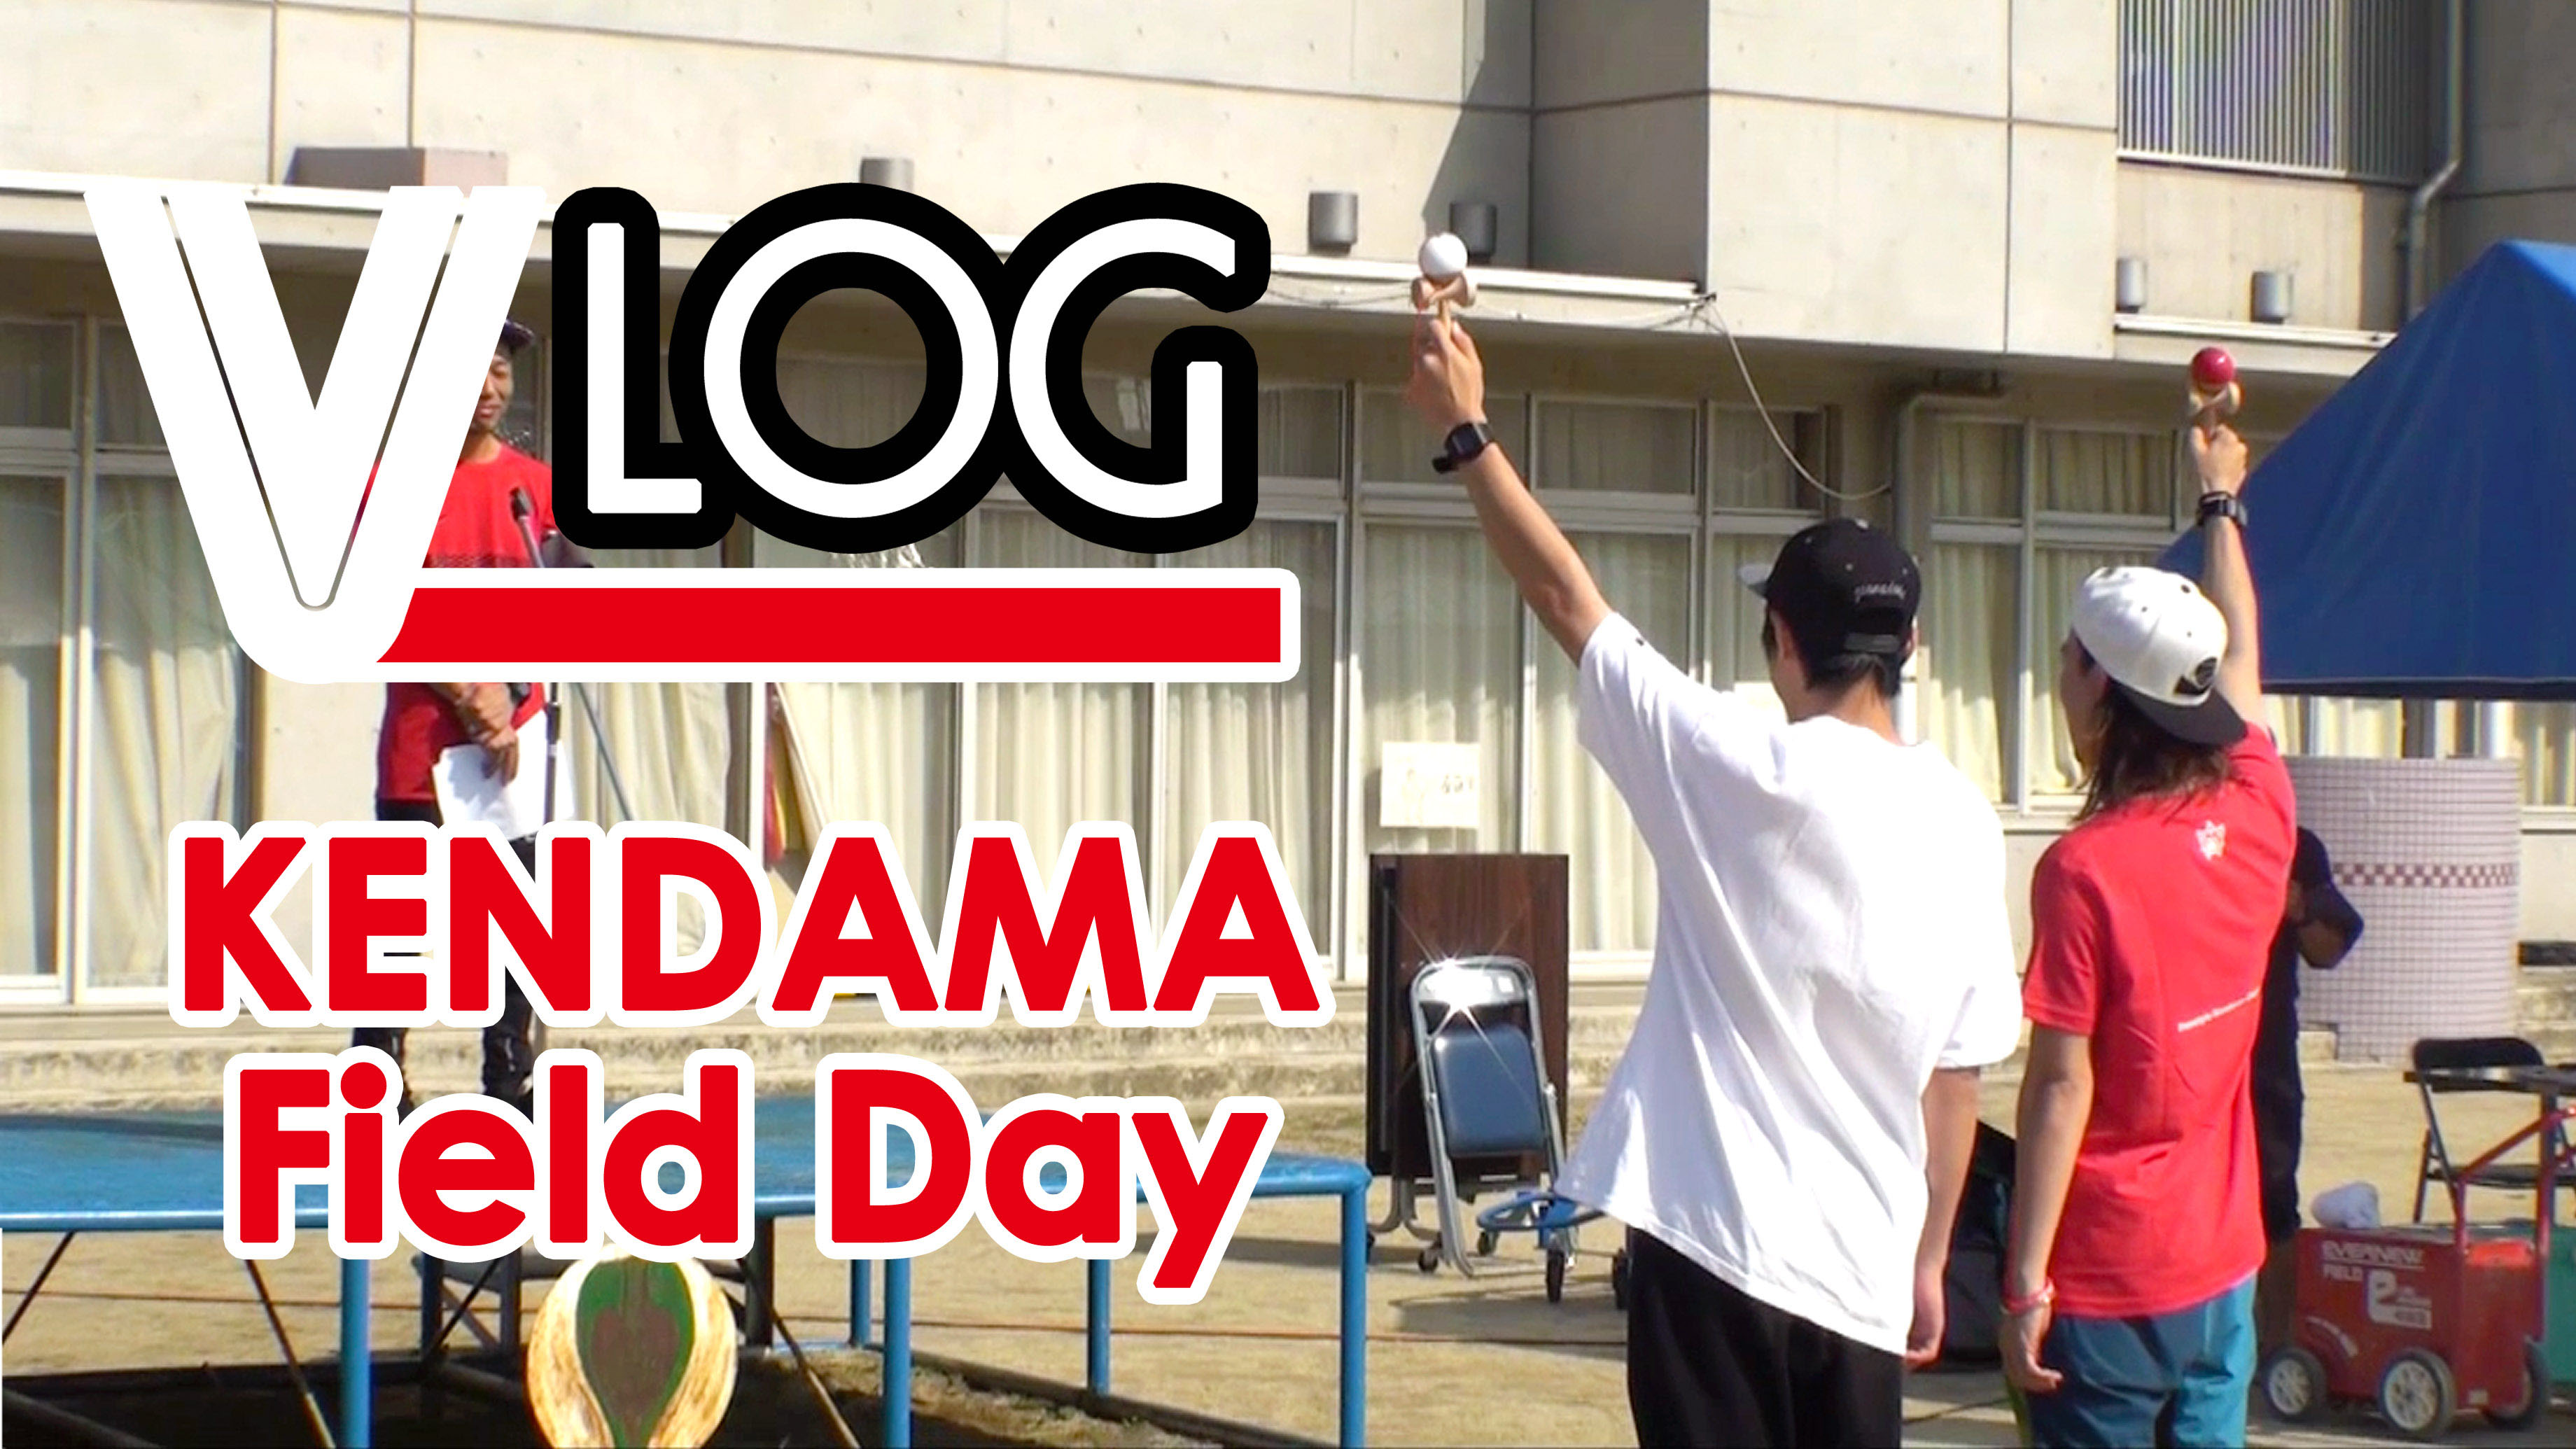 Kendama Field Day